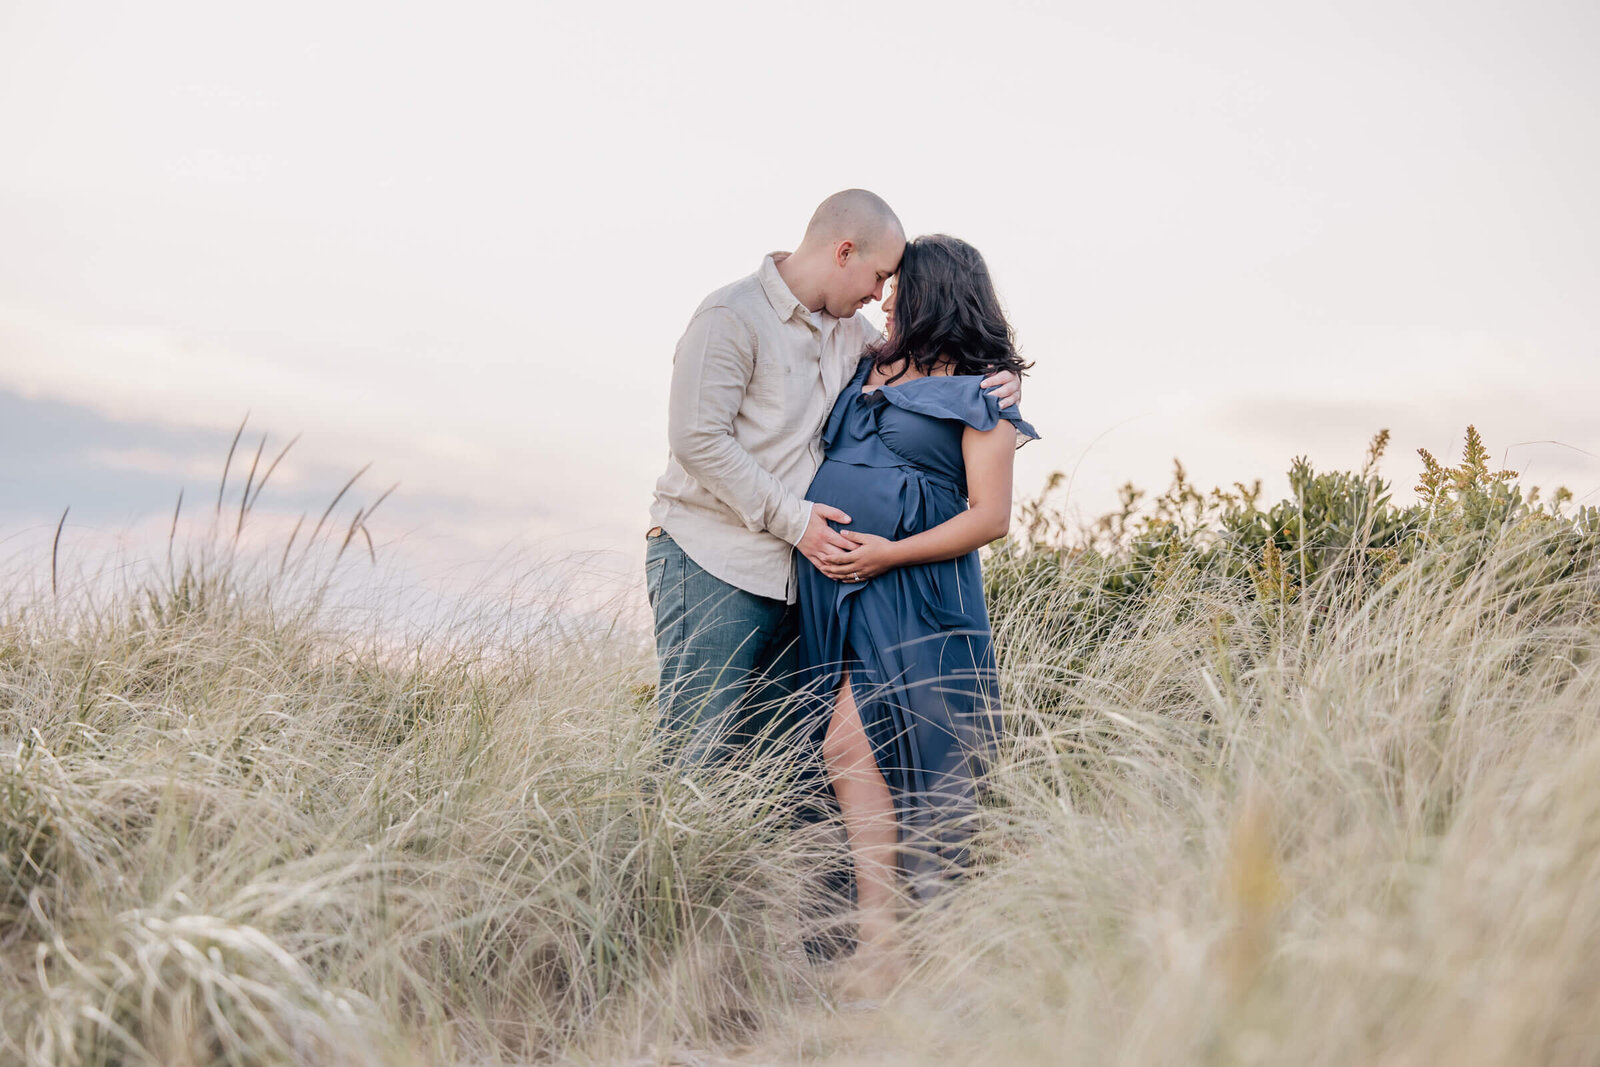 Pregnant woman and husband in tall grass near beach.